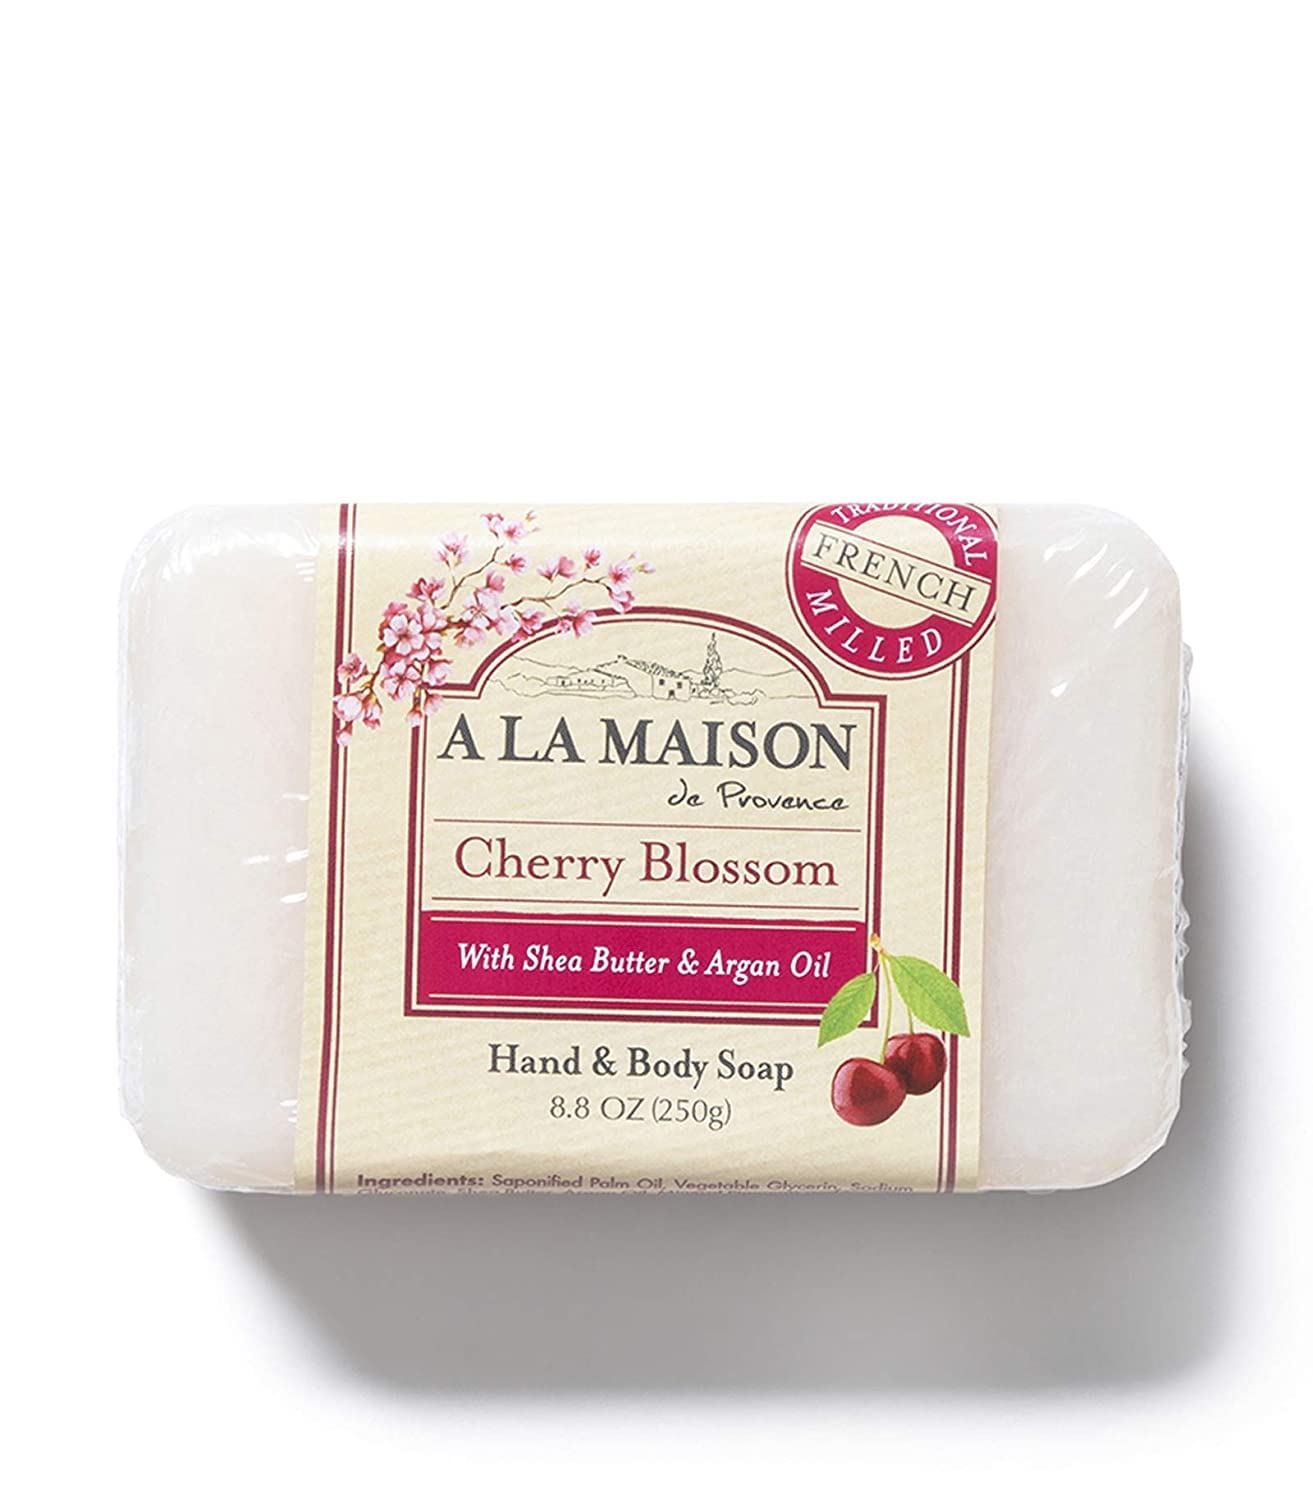 A LA MAISON Cherry Blossom Bar Soap - Triple French Milled Natural Moisturizing Hand Soap Bar (1 Bar of Soap, 8.8 oz)